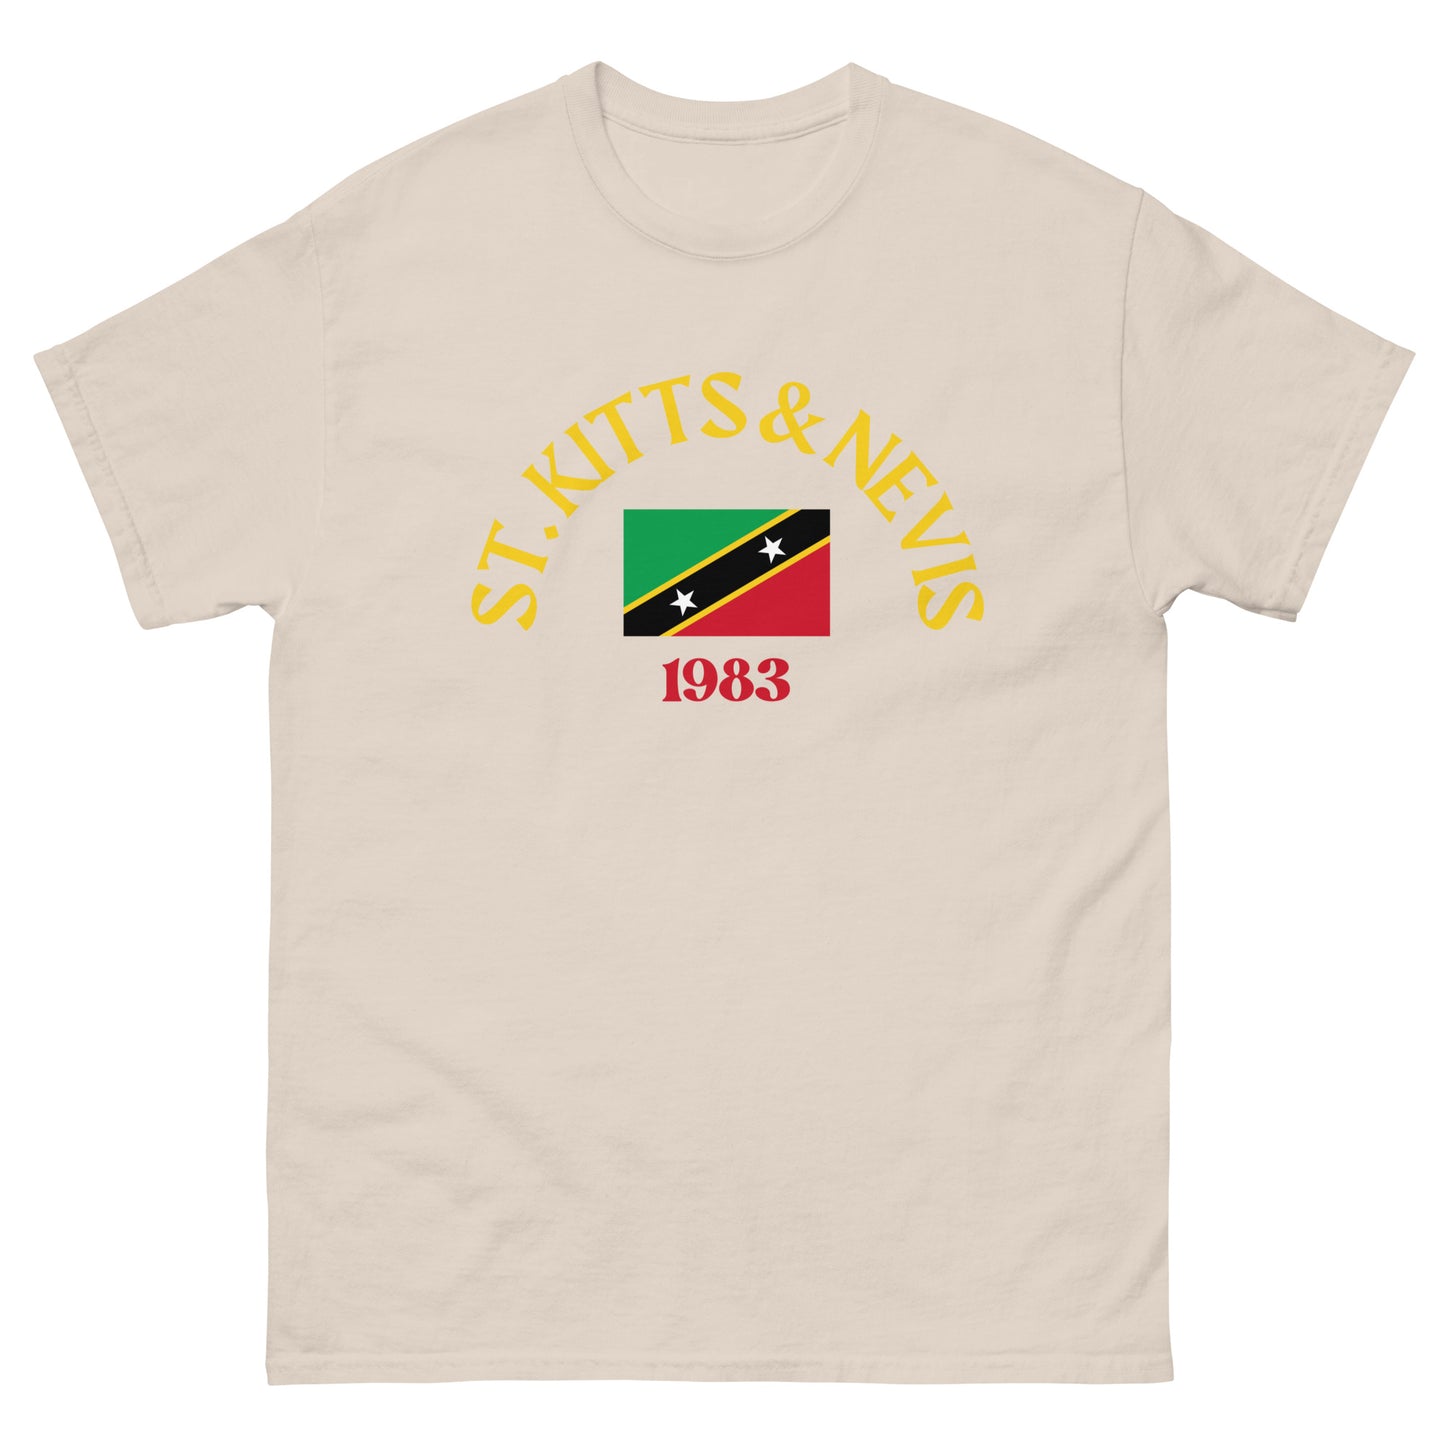 St. Kitts & Nevis Men's classic tee